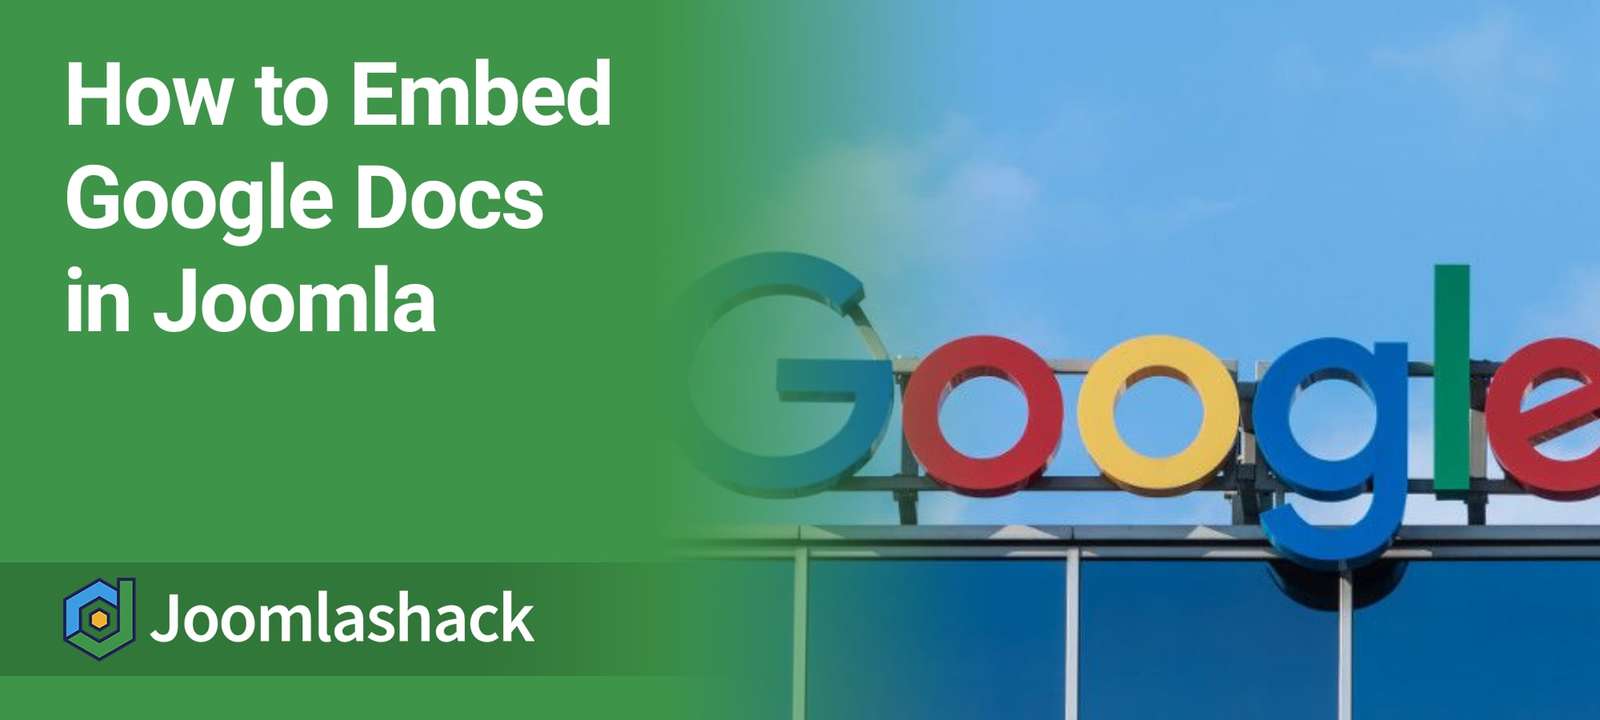 How to Embed Google Docs in Joomla